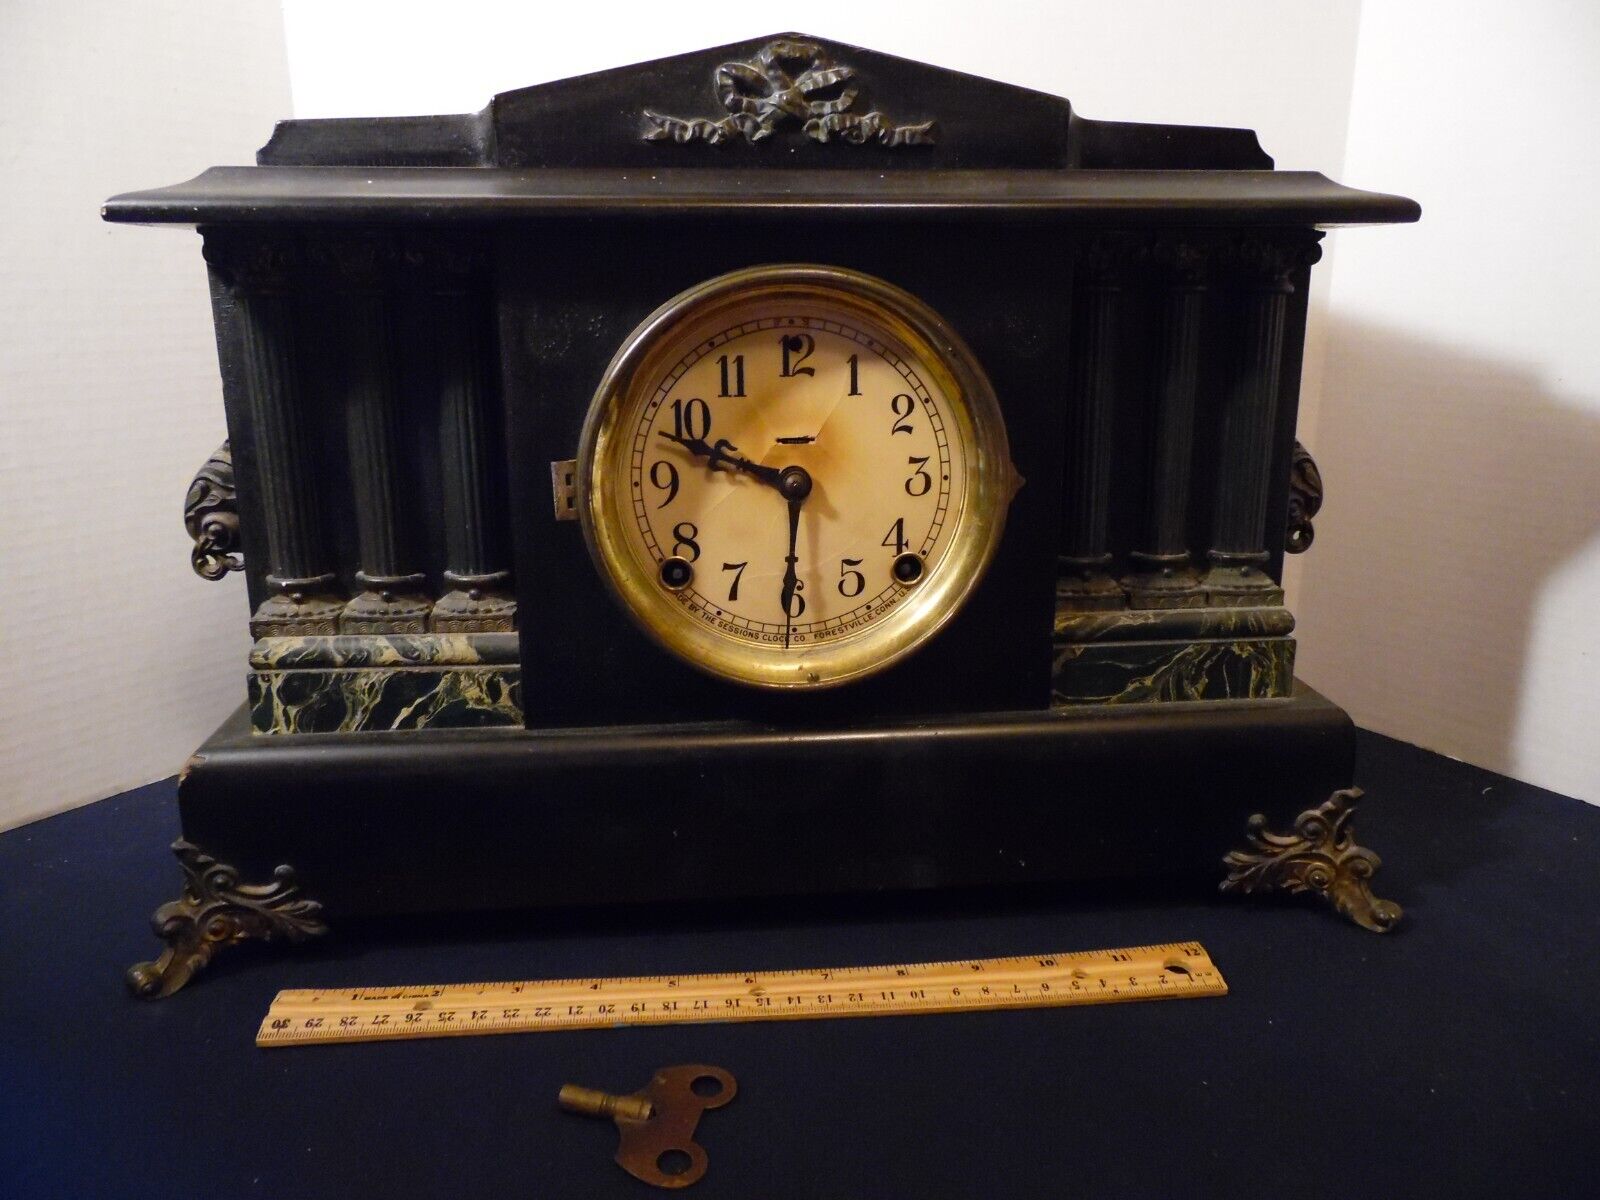 E. Ingraham Co. Bristol Conn. USA Antique Mantel Clock for Parts or Repair